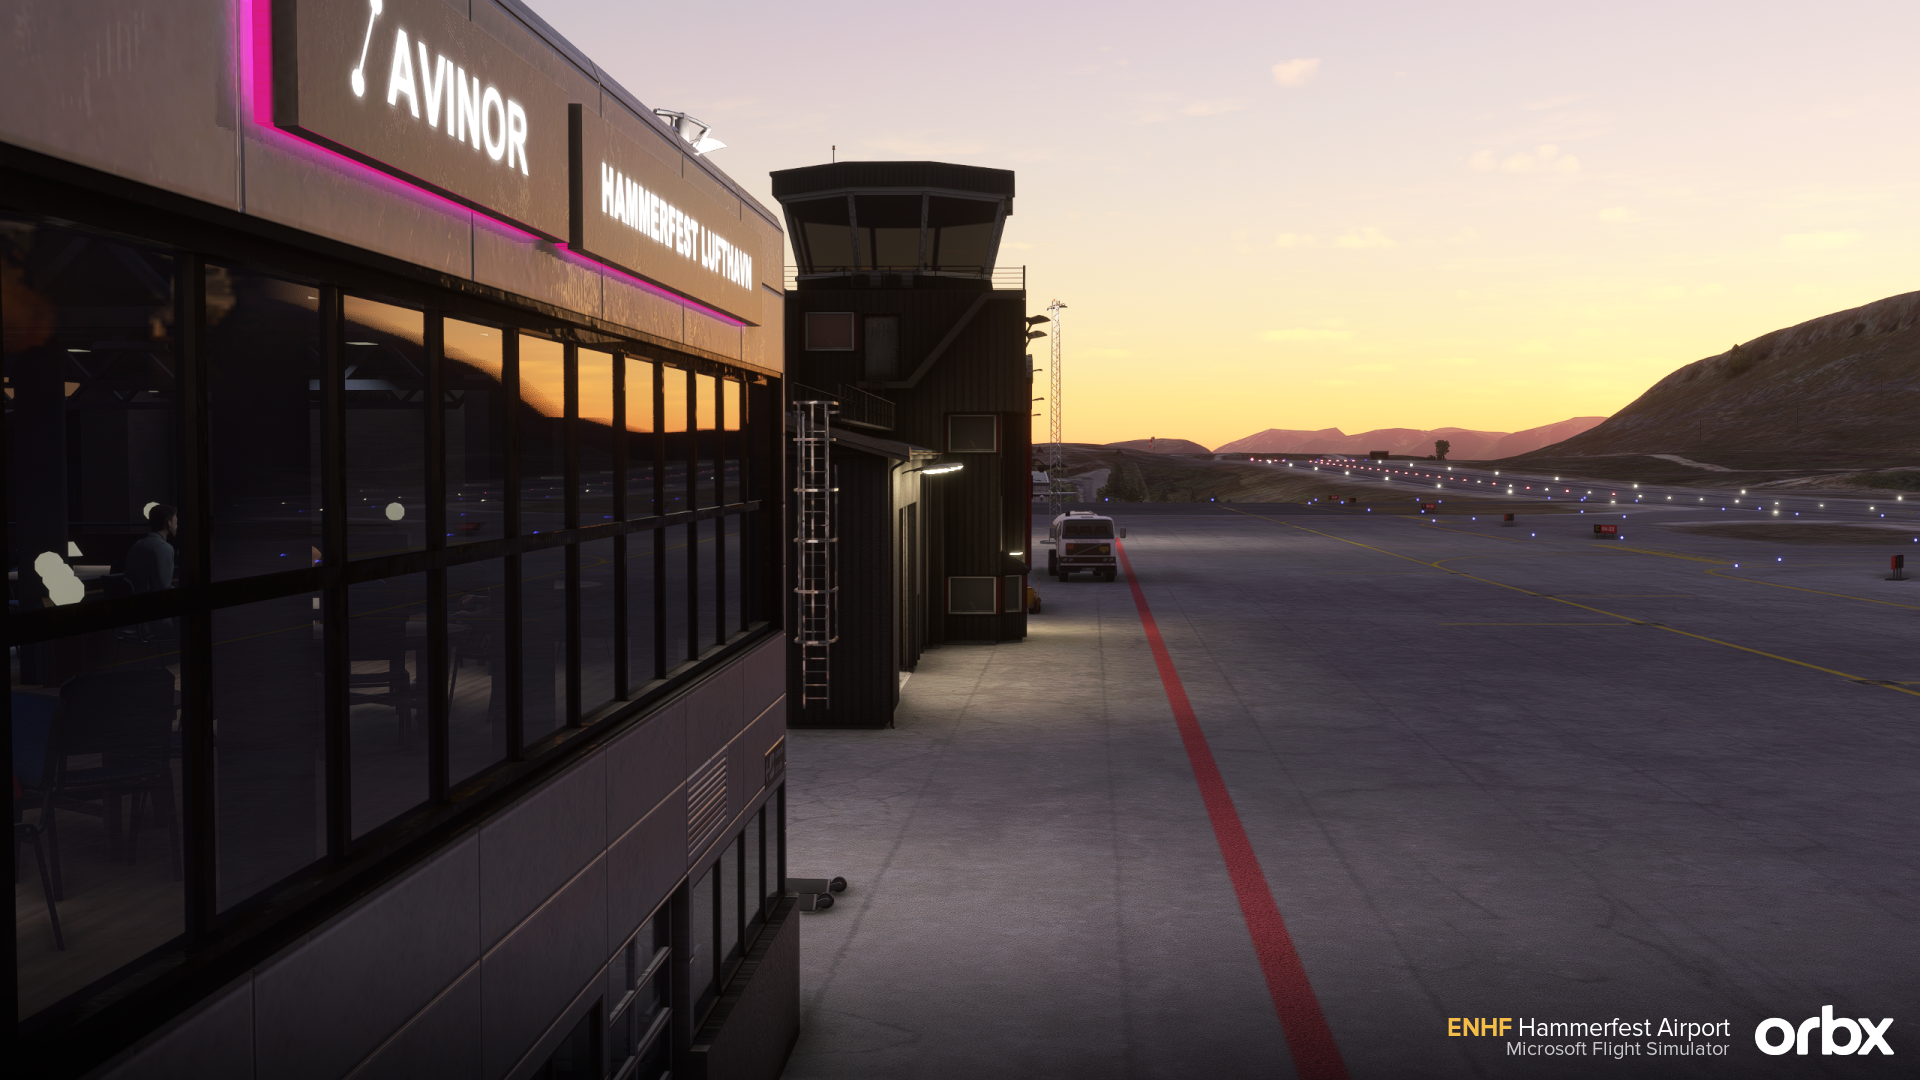 Orbx Announces Hammerfest Airport for MSFS - Microsoft Flight Simulator, Orbx